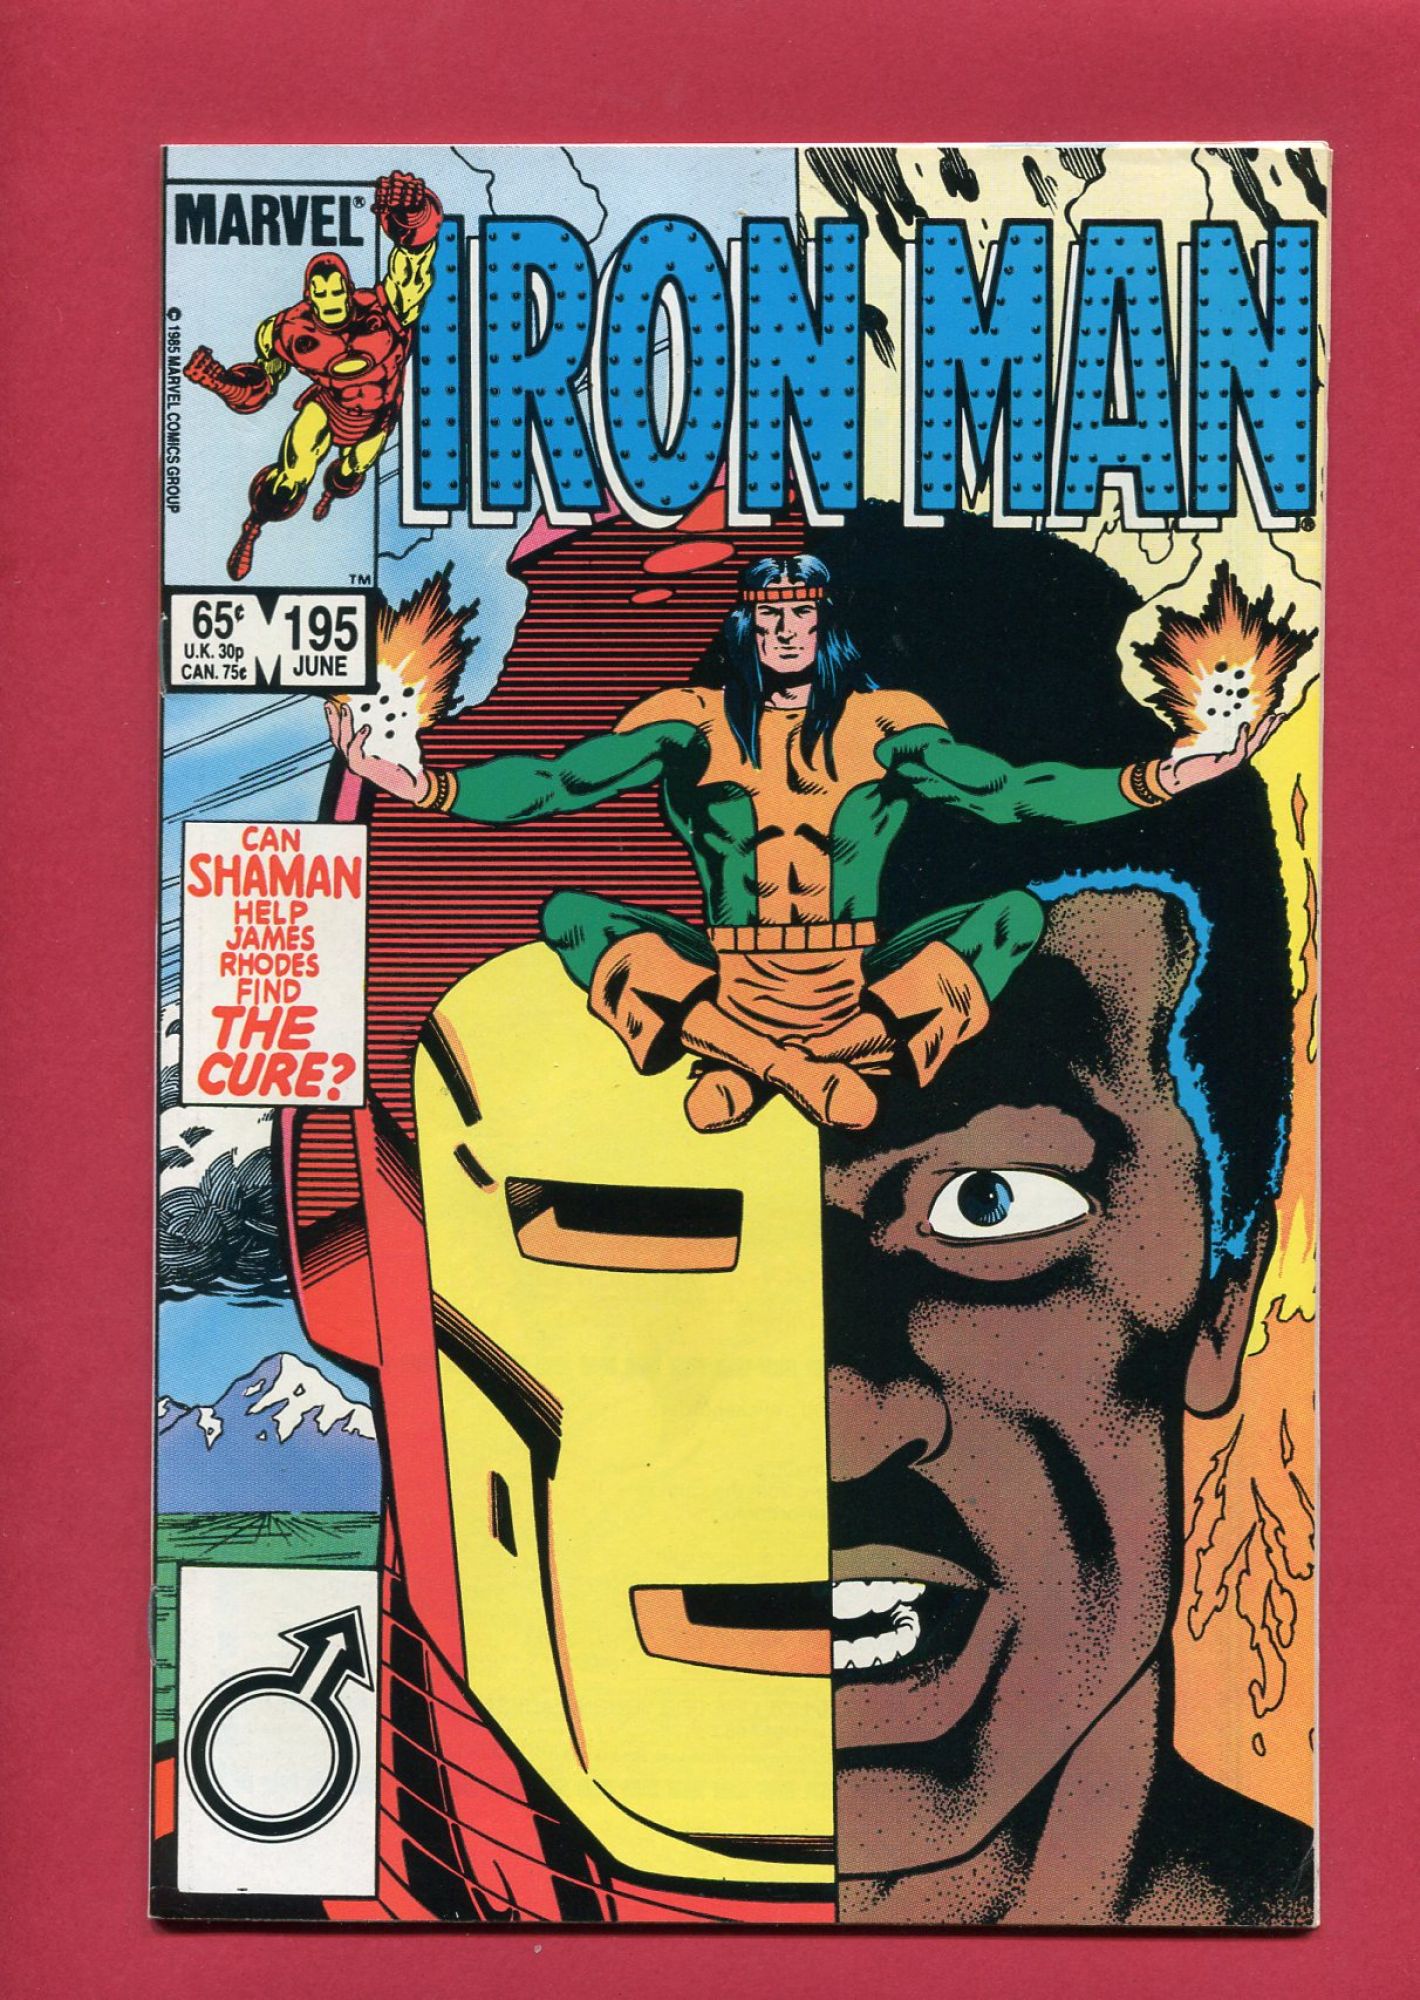 Iron Man #195, Jun 1985, 8.5 VF+